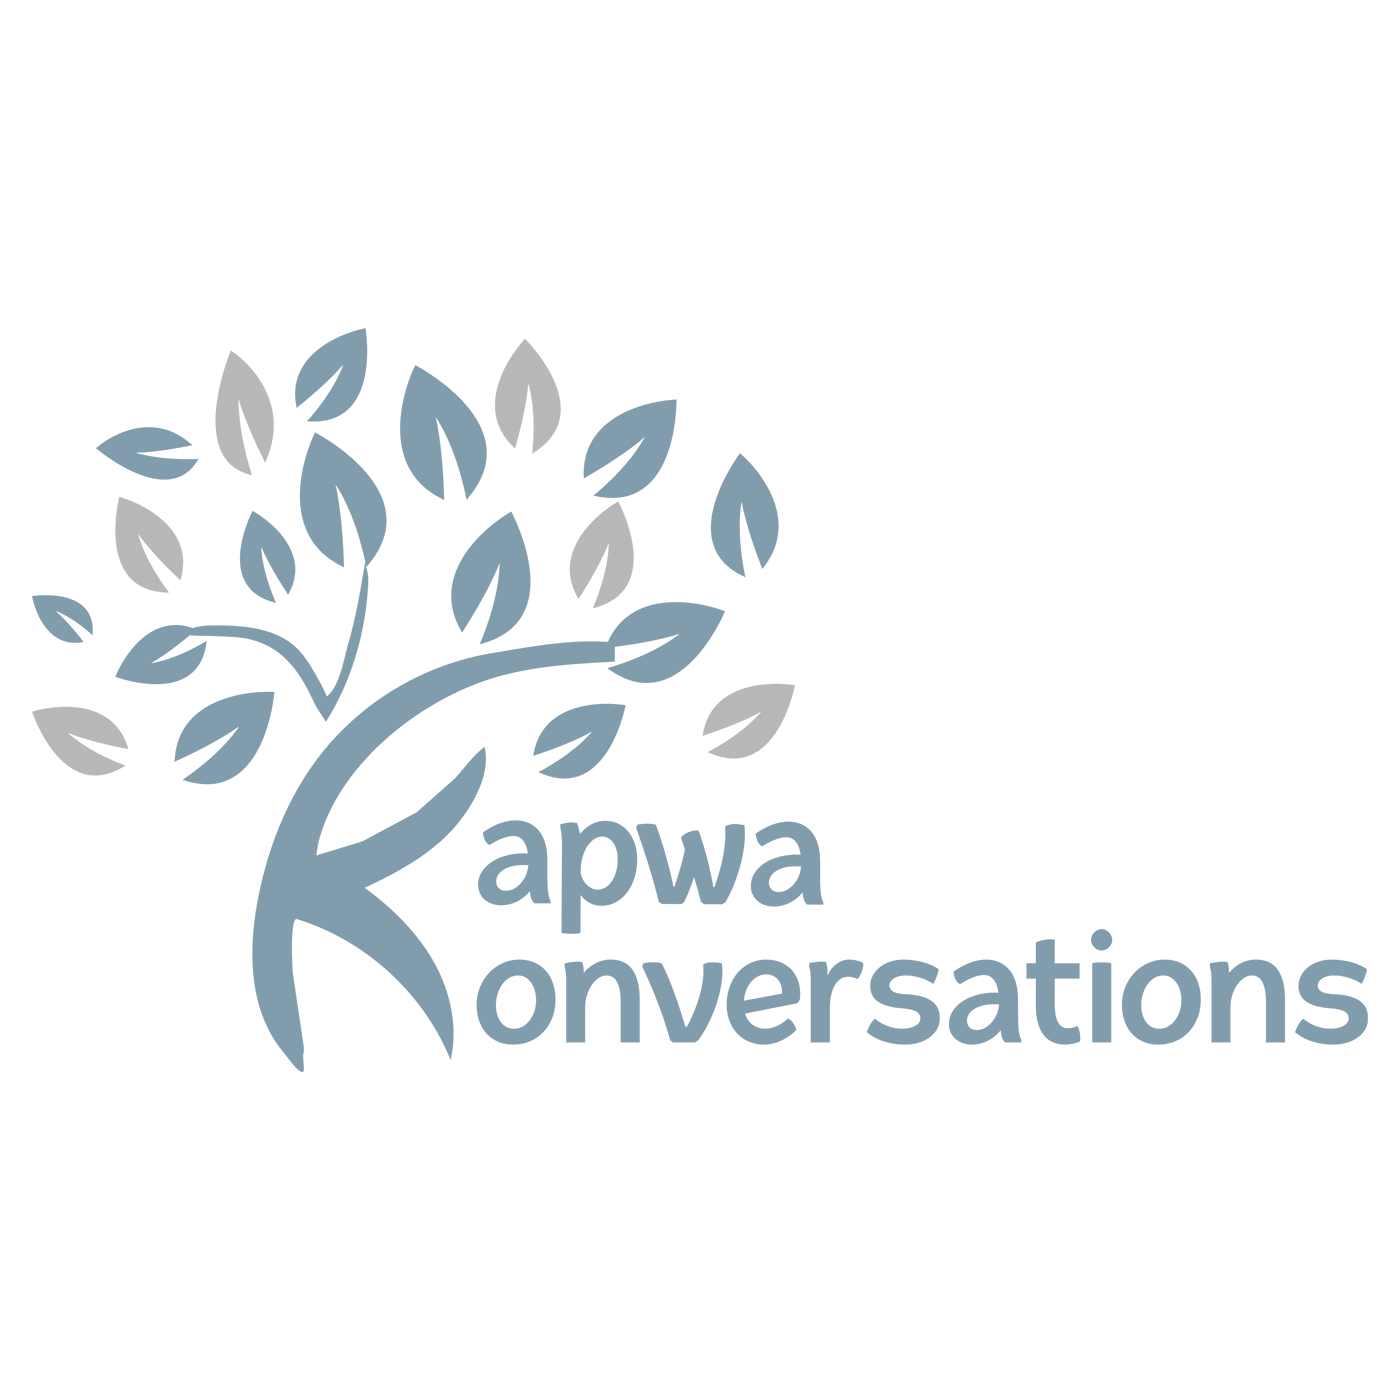 Artwork for Kapwa Konversations